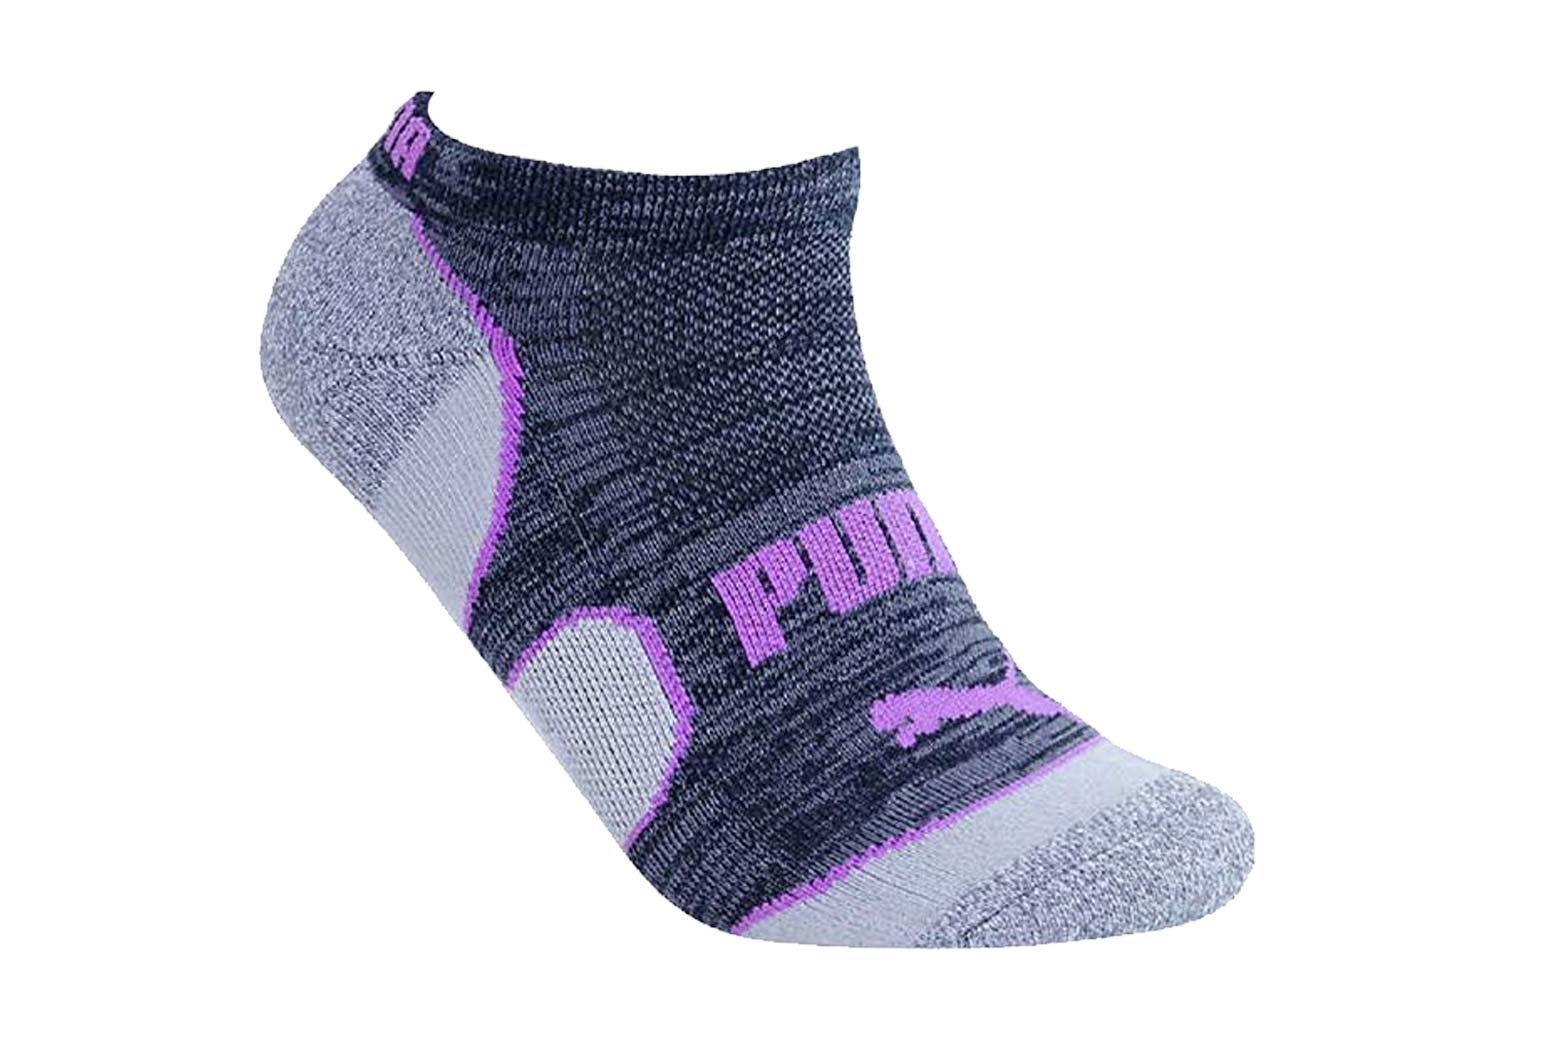 Gray socks with purple trim.